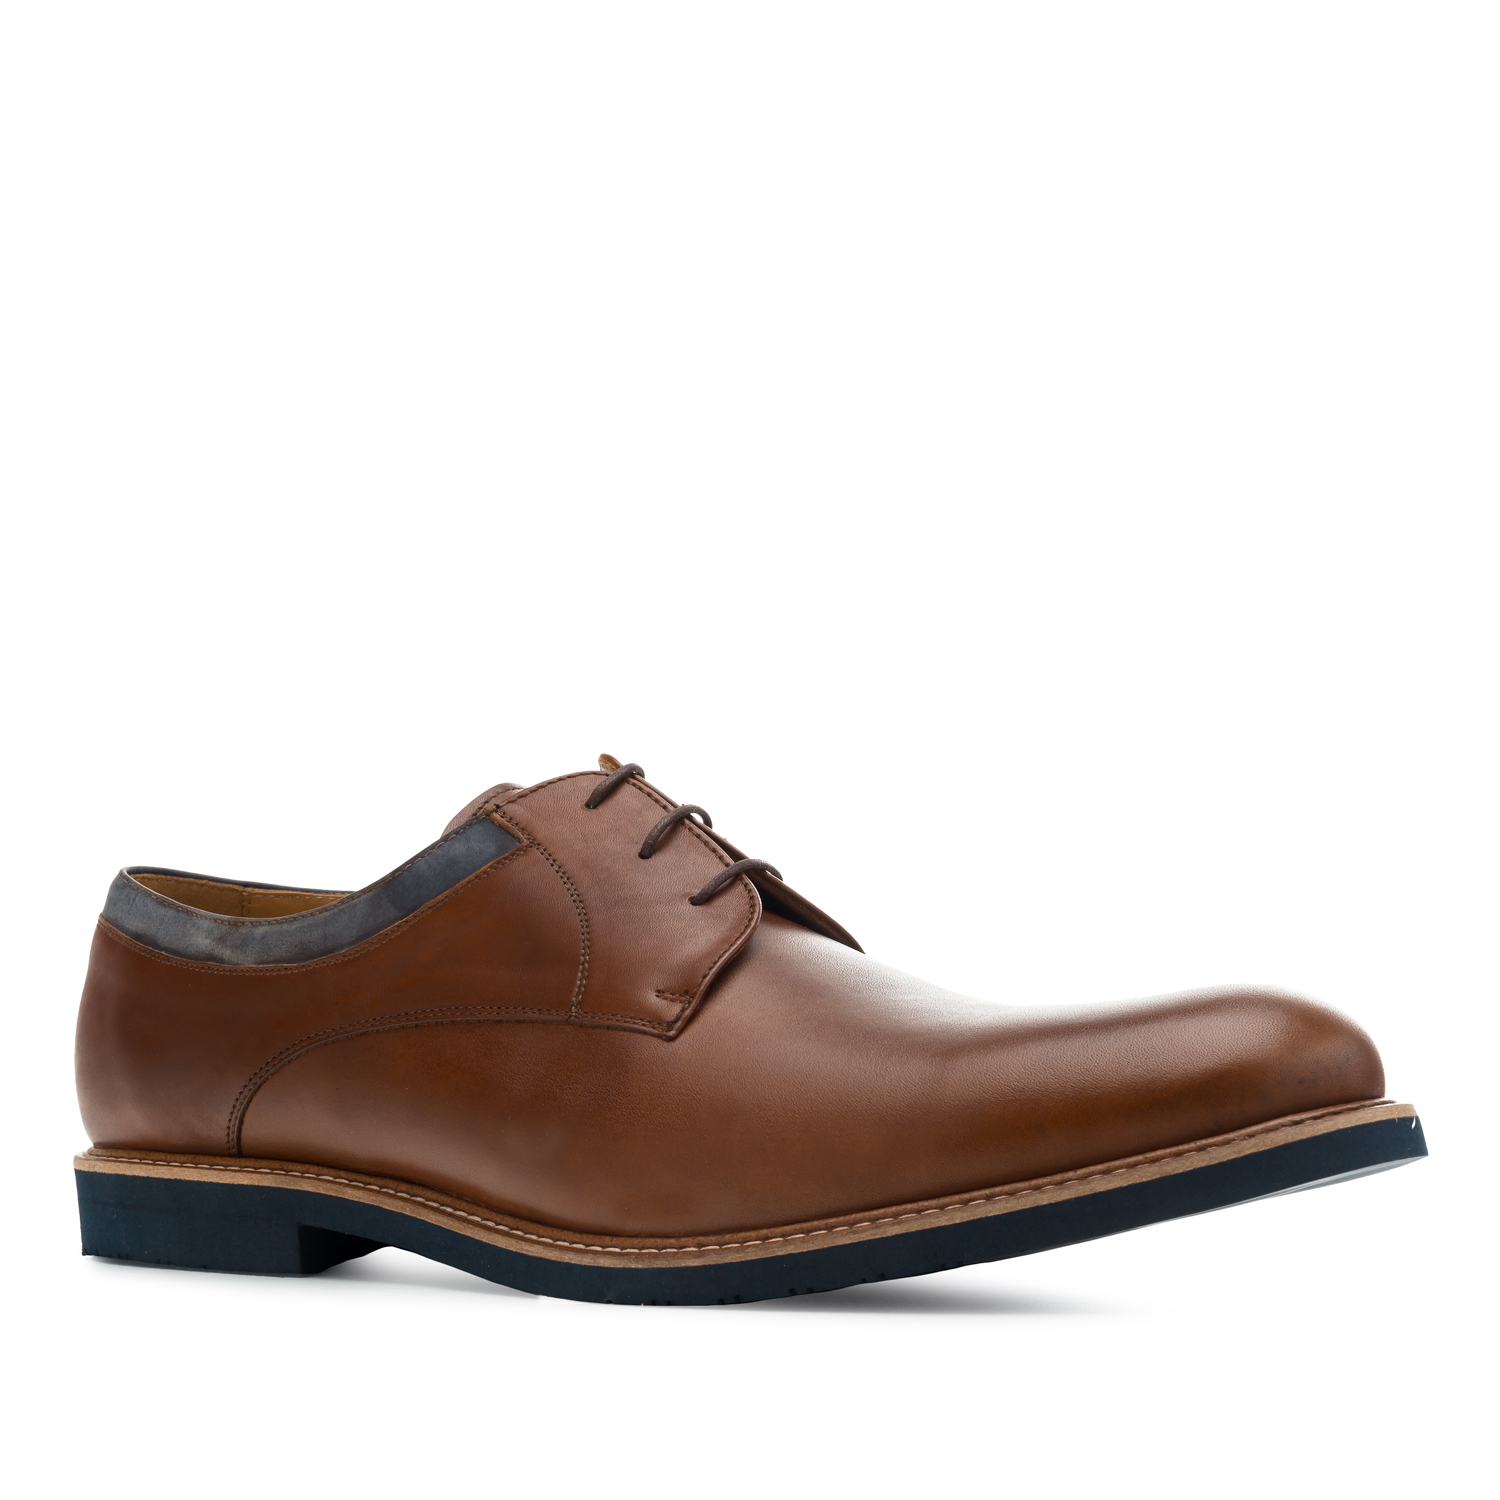 Chaussures Style Blucher en cuir Marron. 